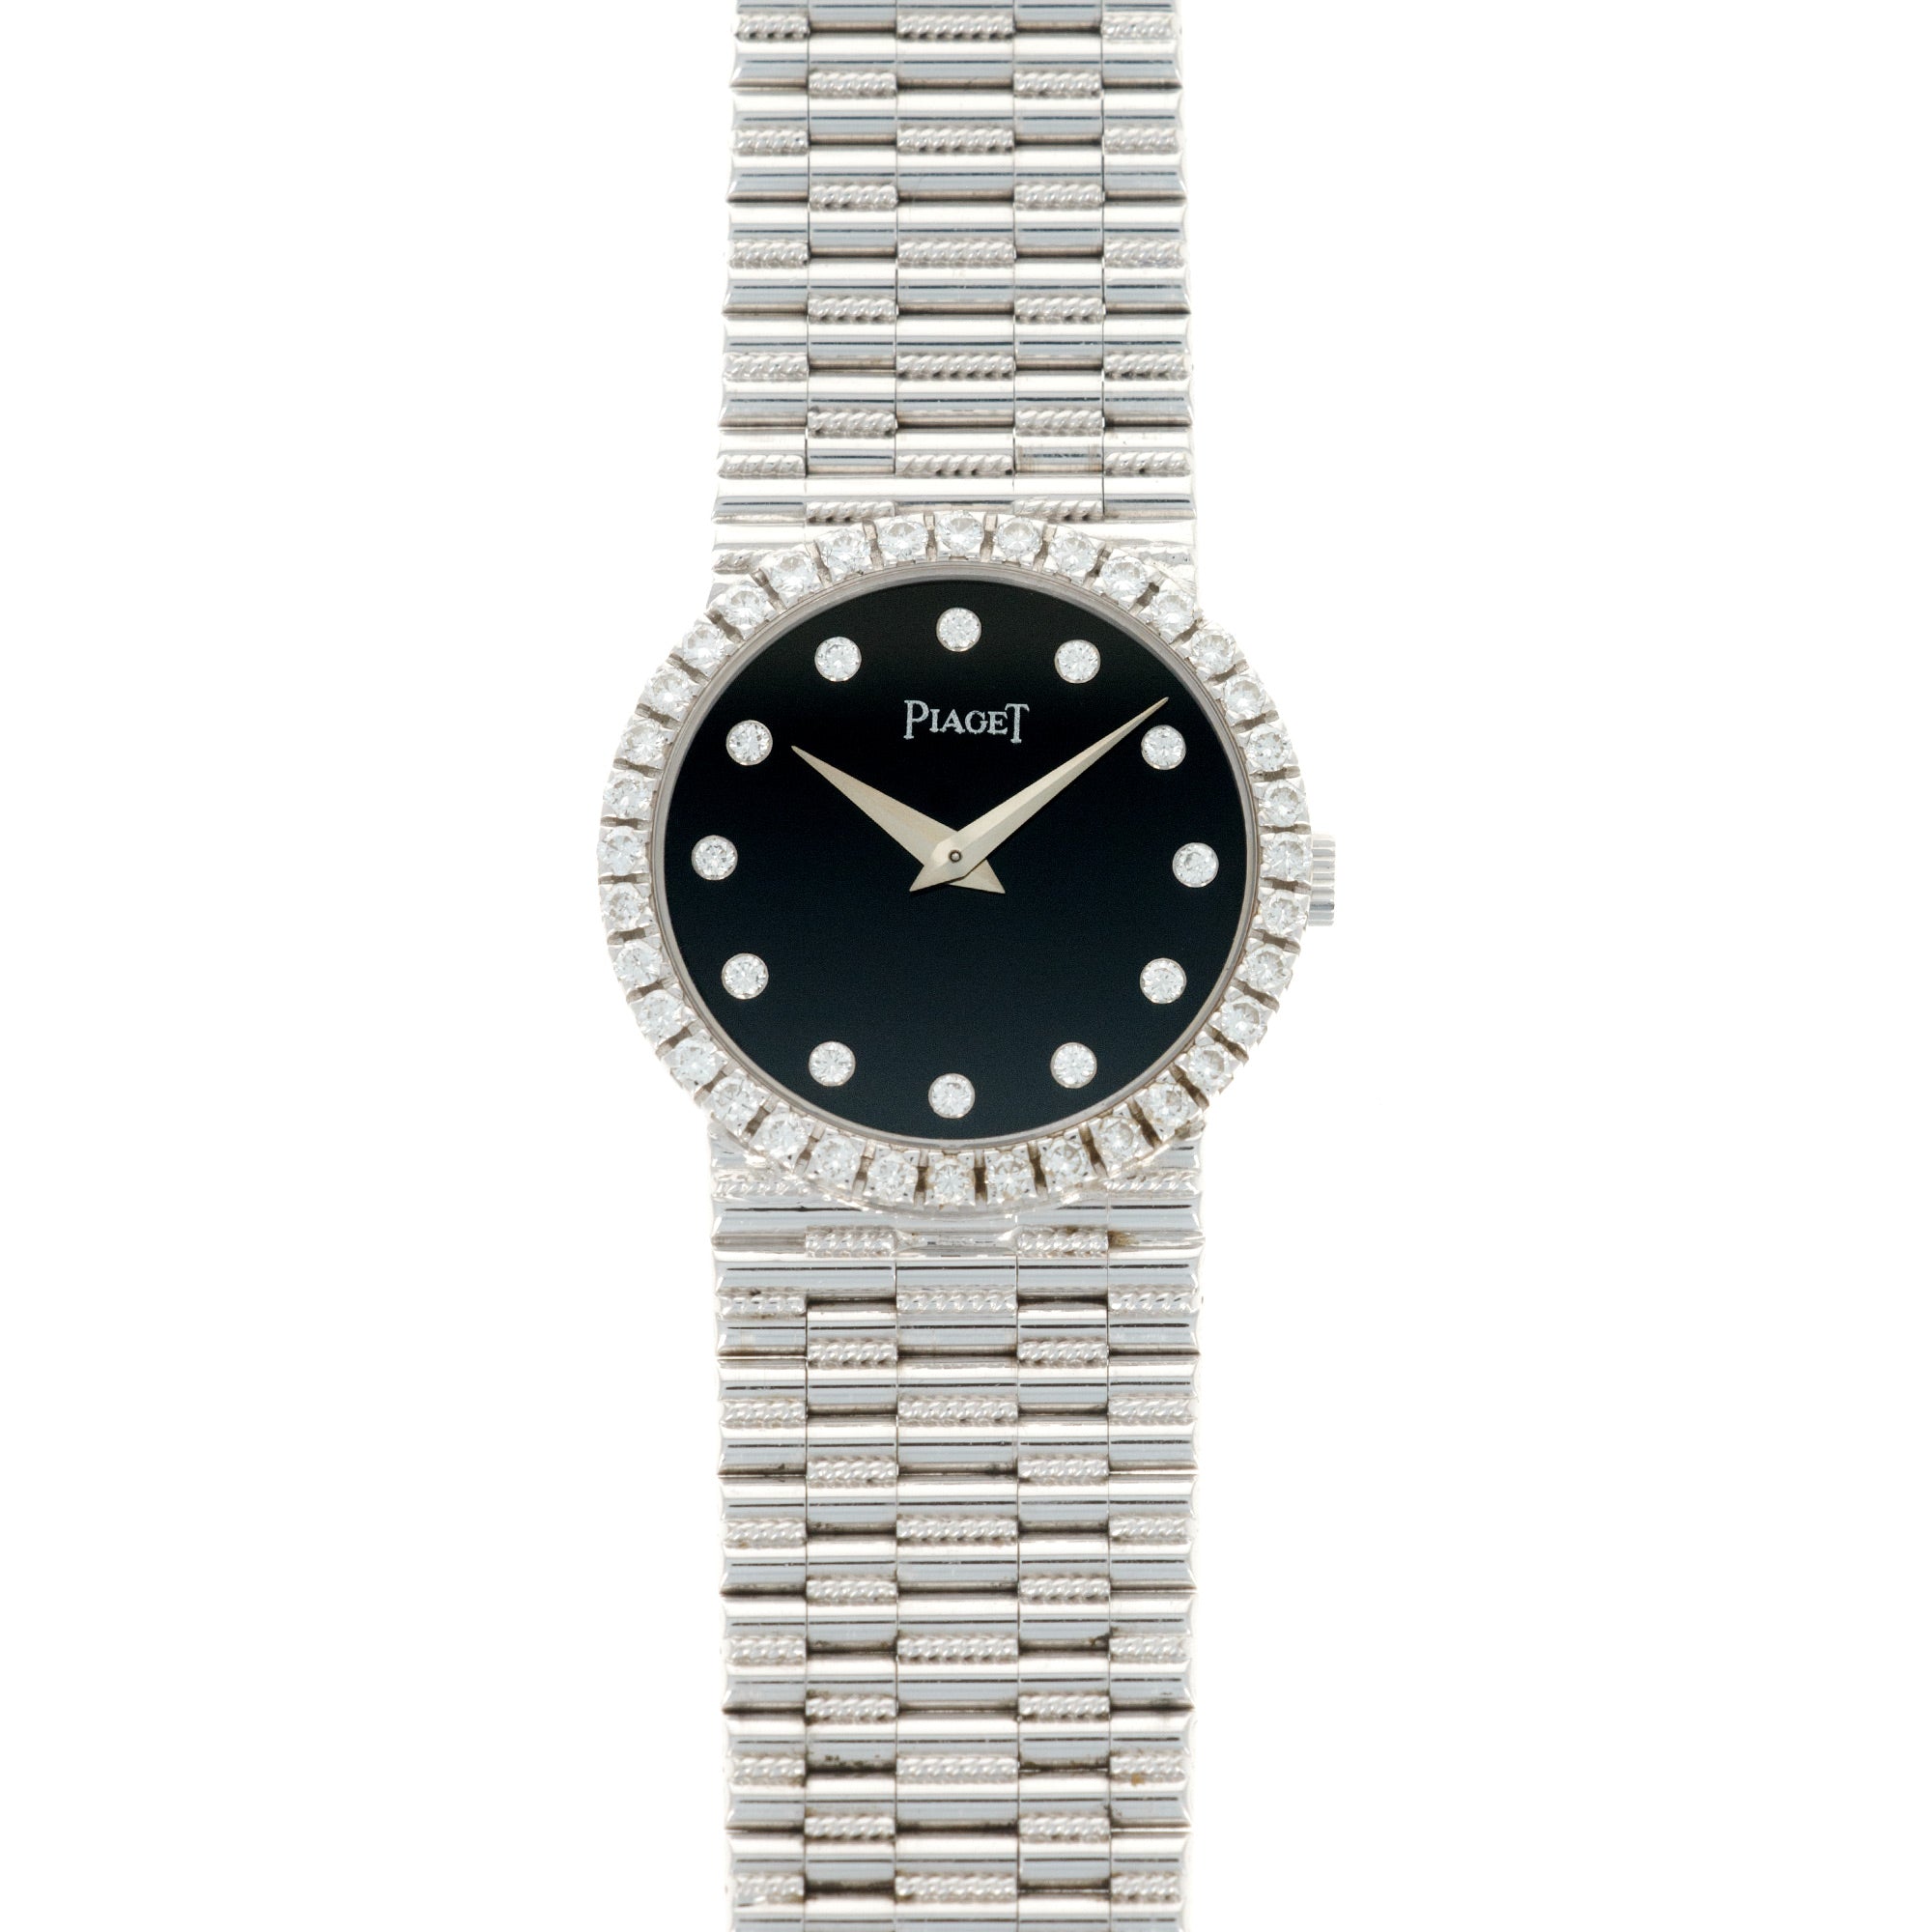 Piaget - Piaget White gold Onyx & Diamond Watch, 1970s - The Keystone Watches